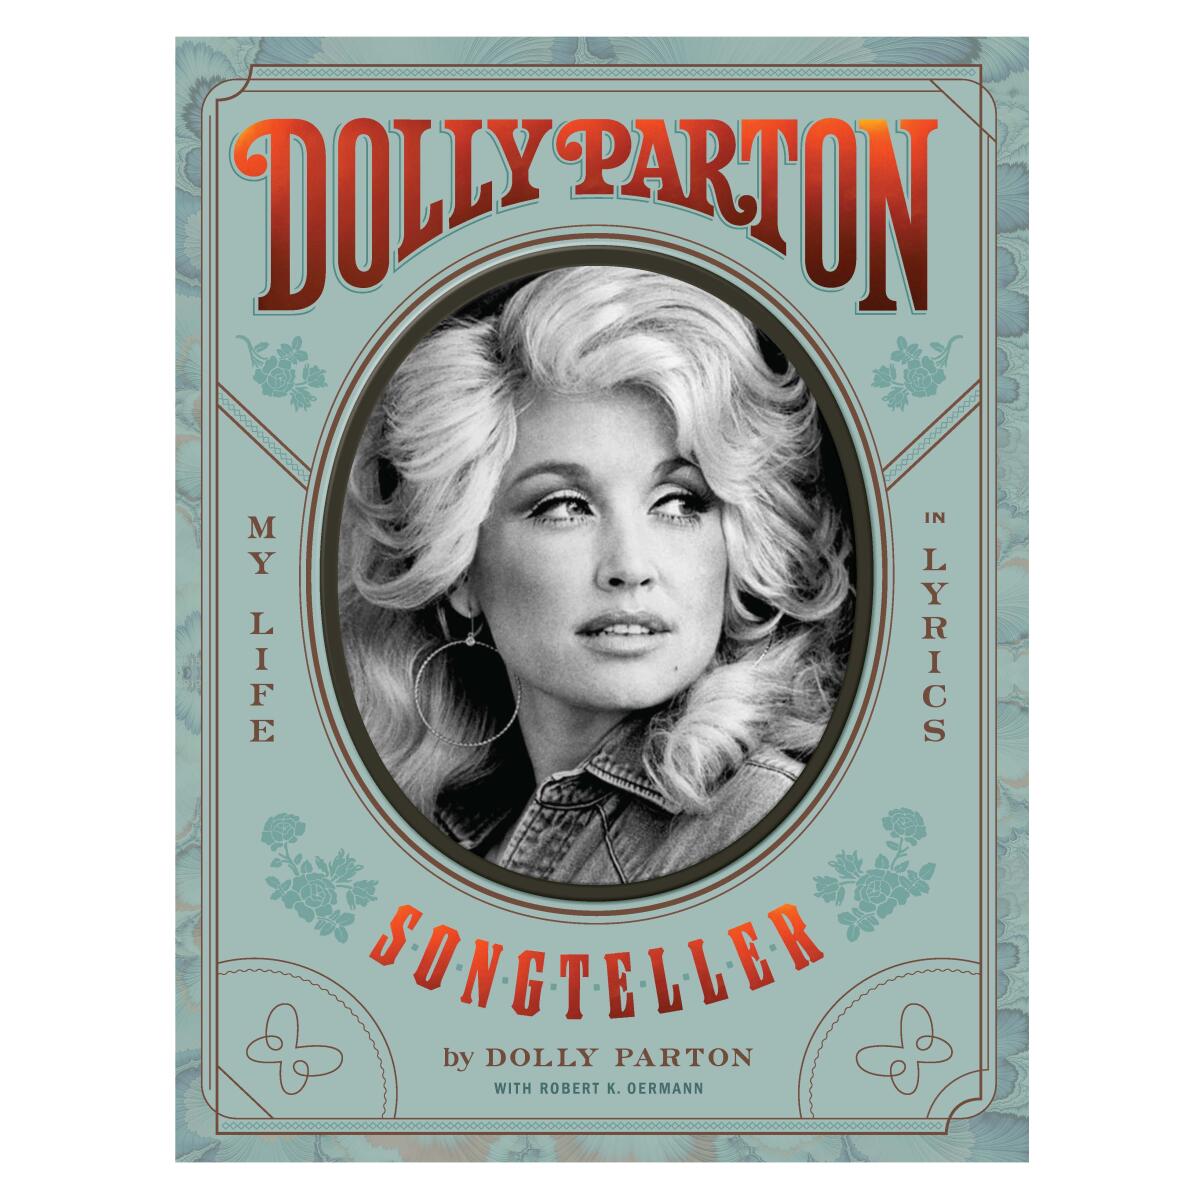 Dolly Parton's "Songteller: My Life in Lyrics" 